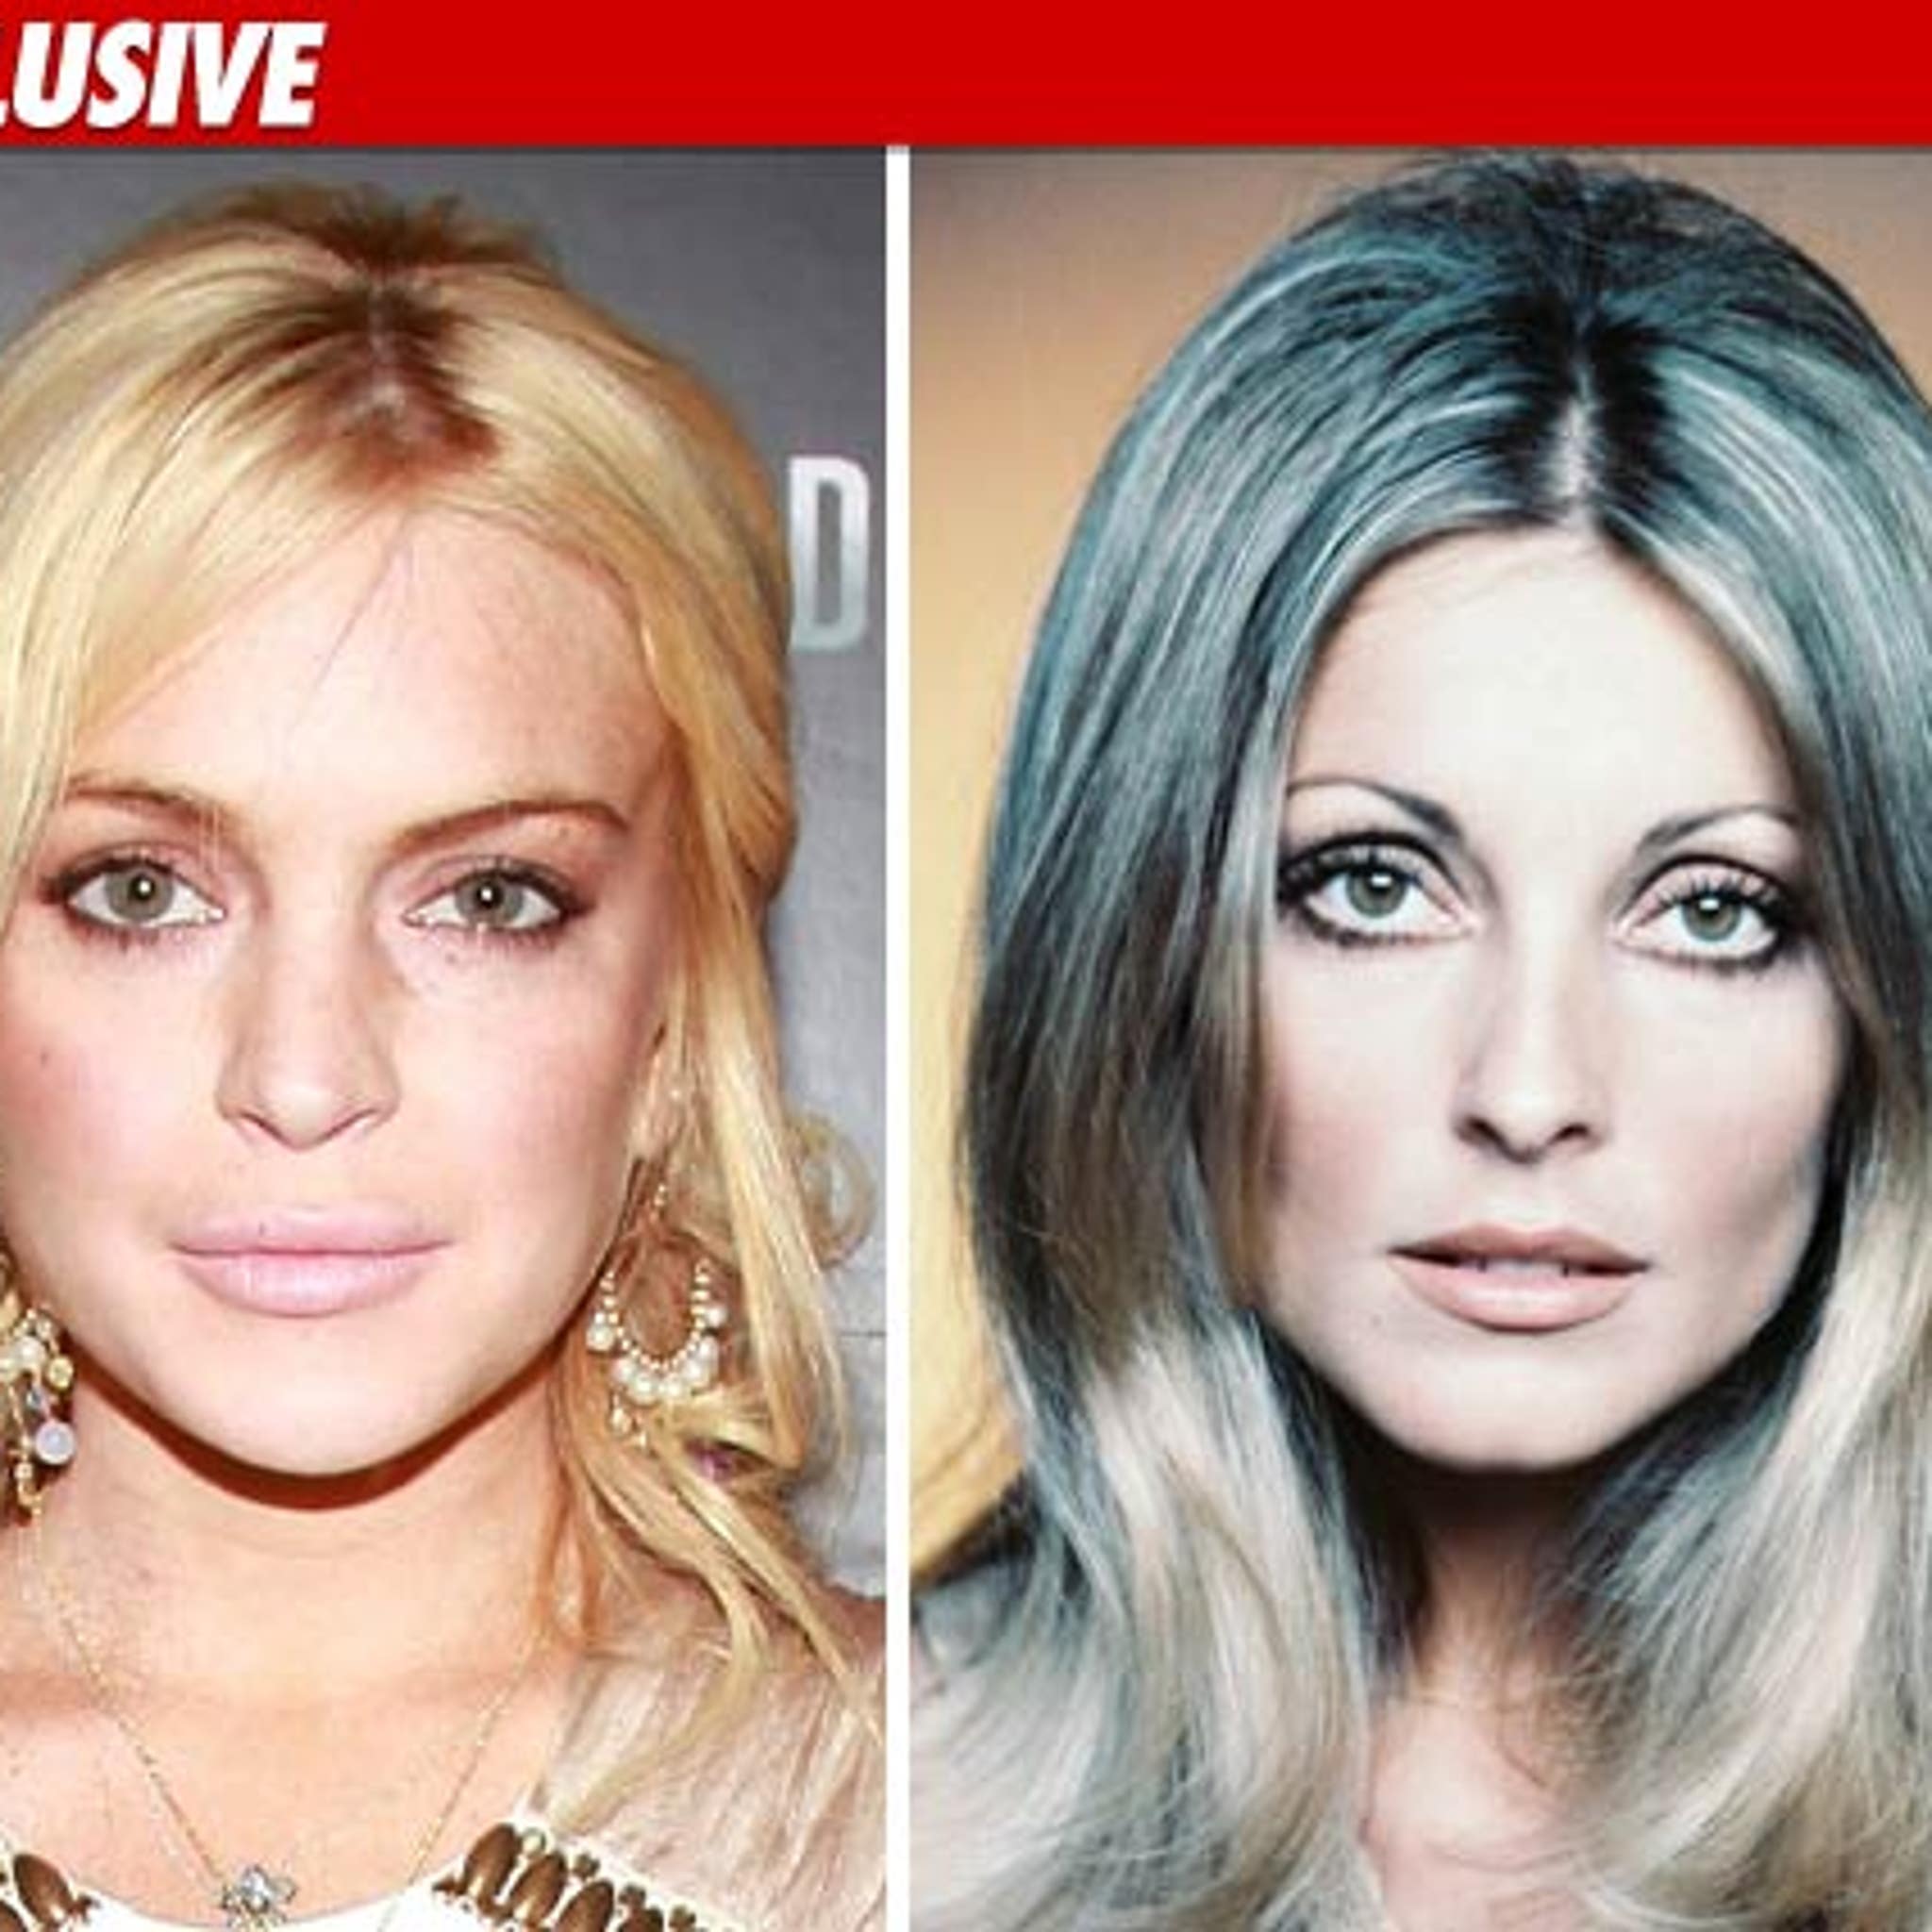 Lindsay Lohan blasted for 'tasteless' Sharon Tate tribute (PHOTO) – SheKnows